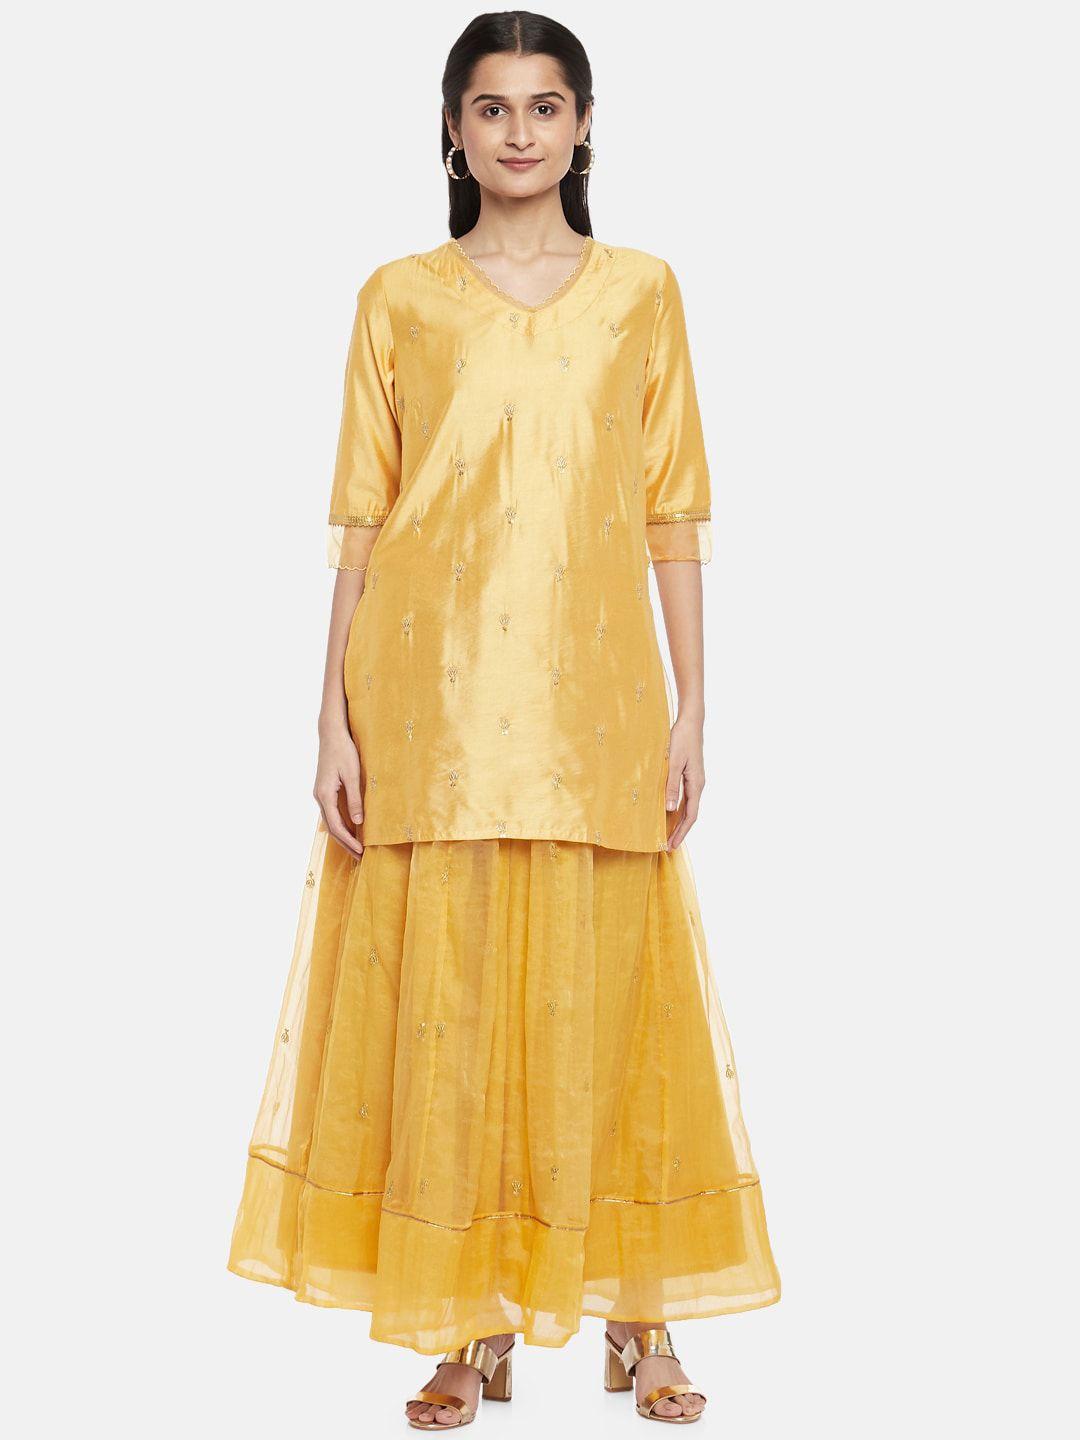 rangmanch-by-pantaloons-women-yellow-embroidered-regular-kurta-with-skirt-&-dupatta-set